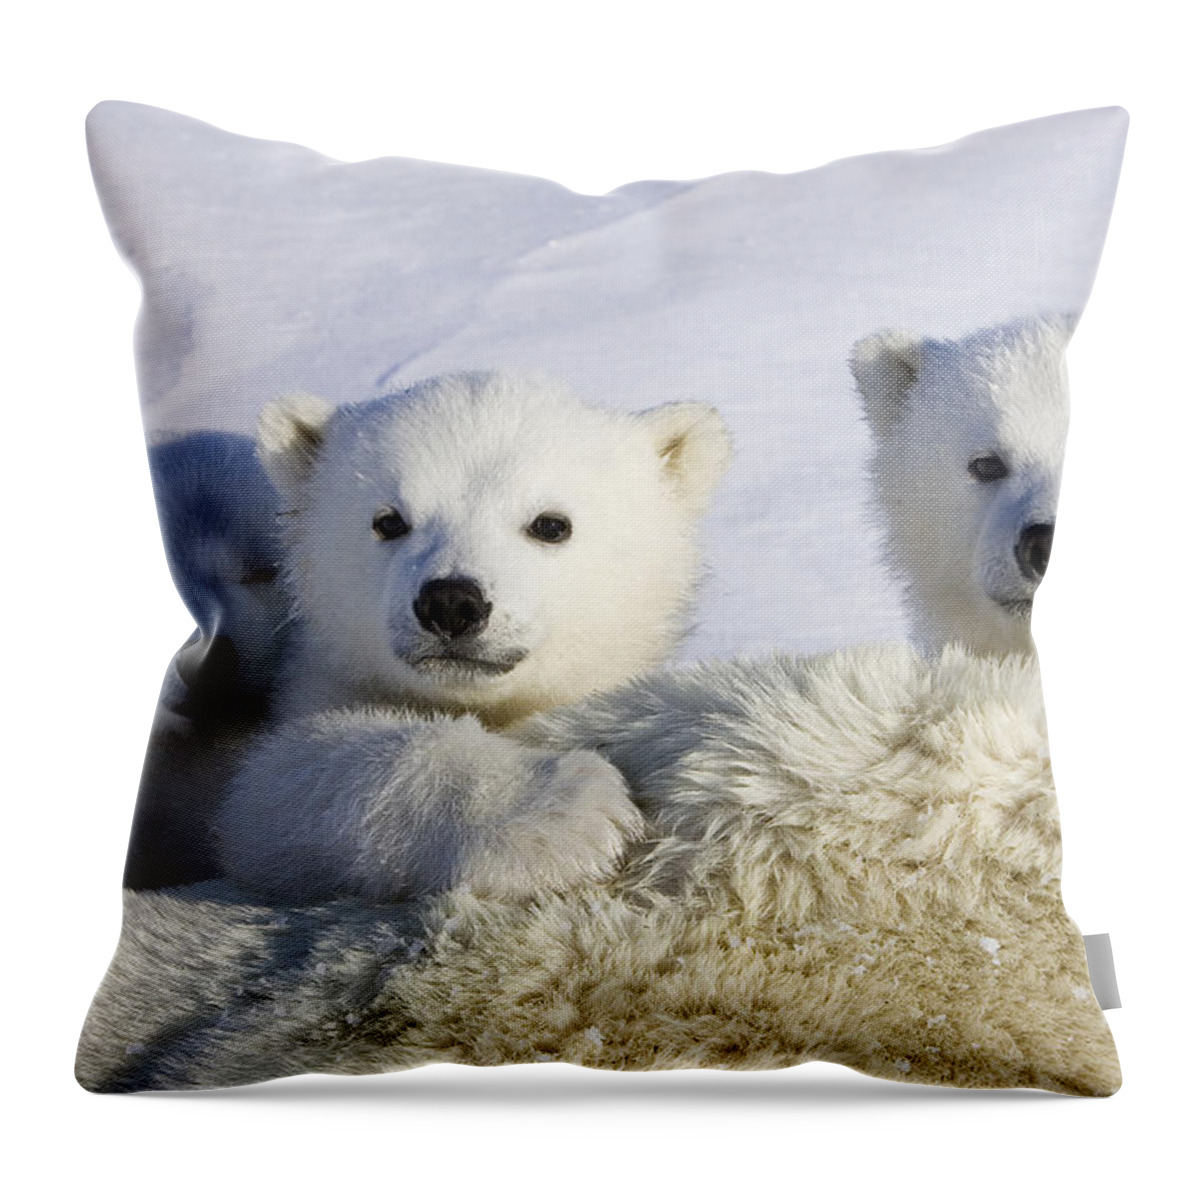 00761352 Throw Pillow featuring the photograph Polar Bear Cubs Peeking Over Mother by Suzi Eszterhas